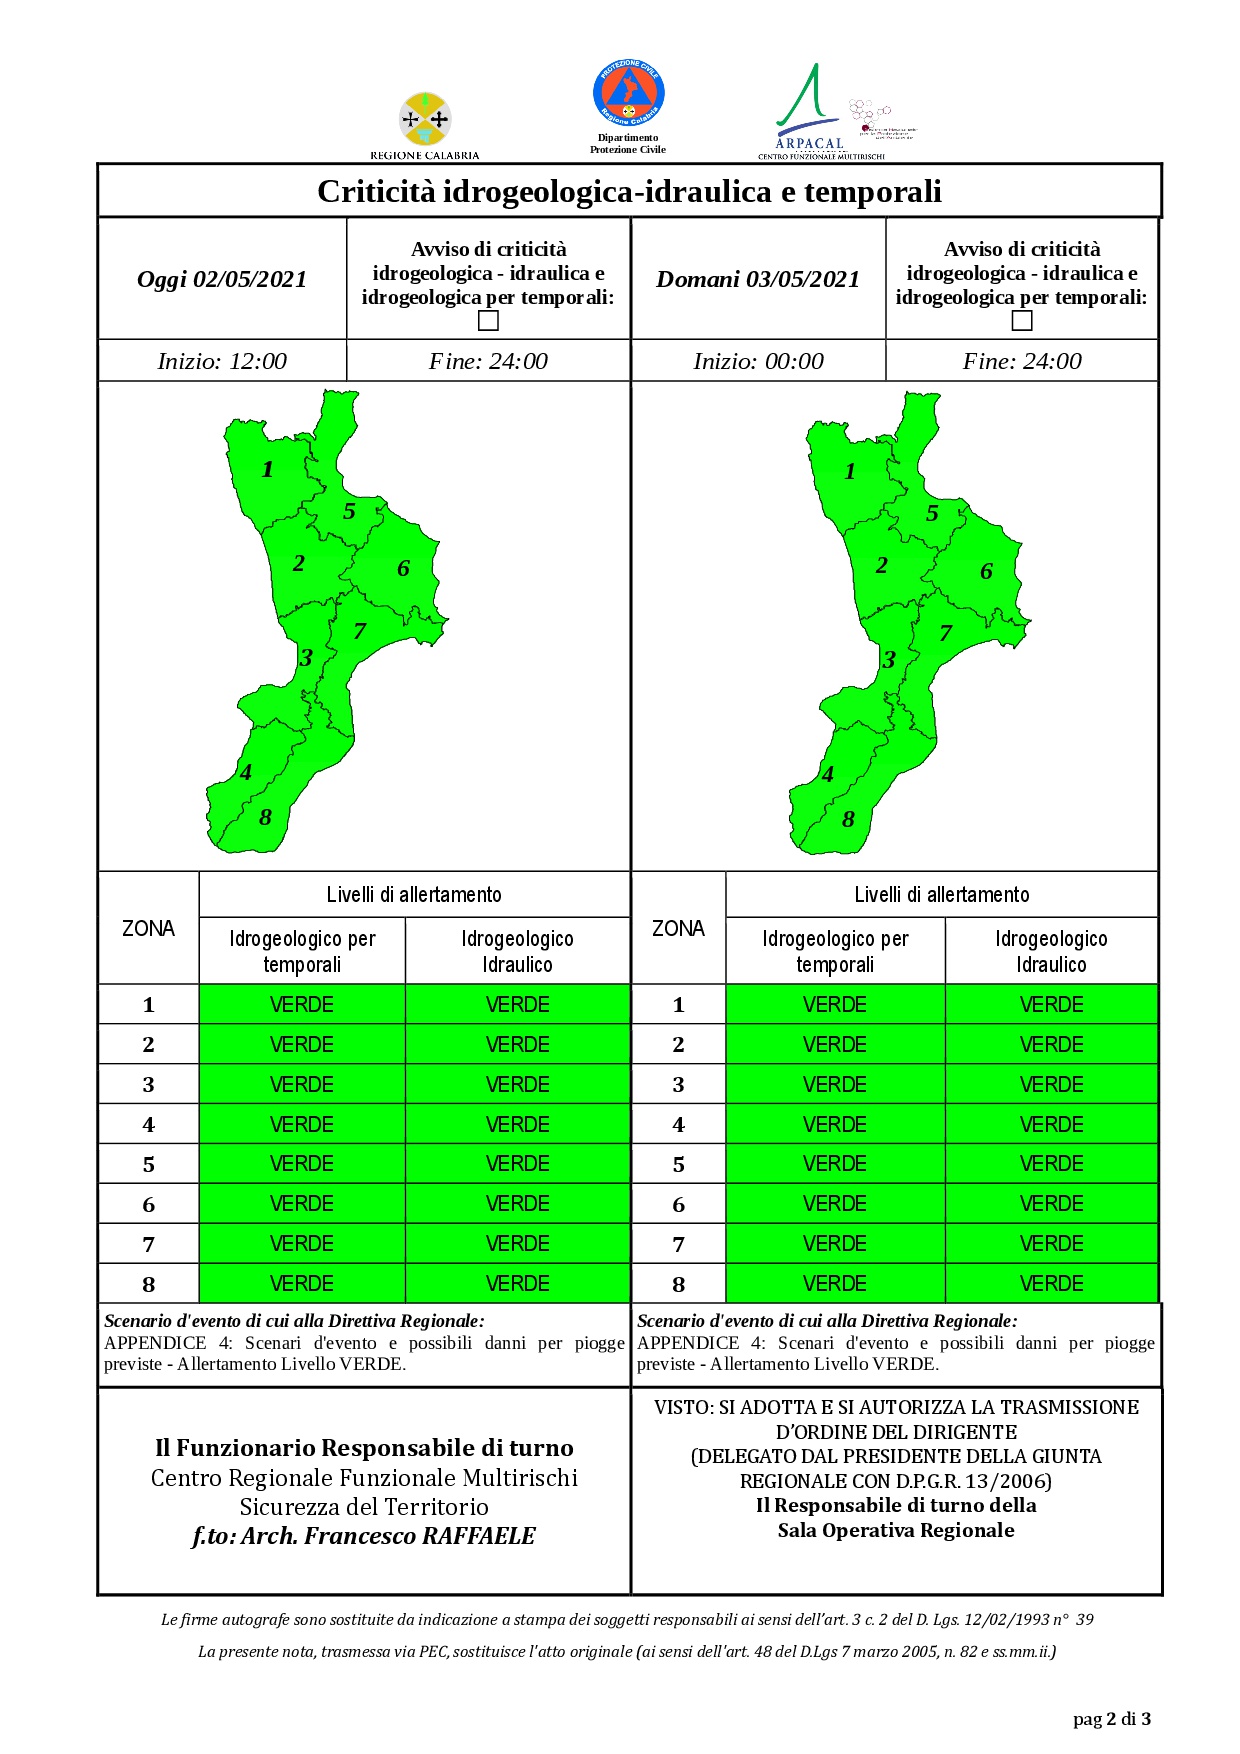 Criticità idrogeologica-idraulica e temporali in Calabria 02-05-2021